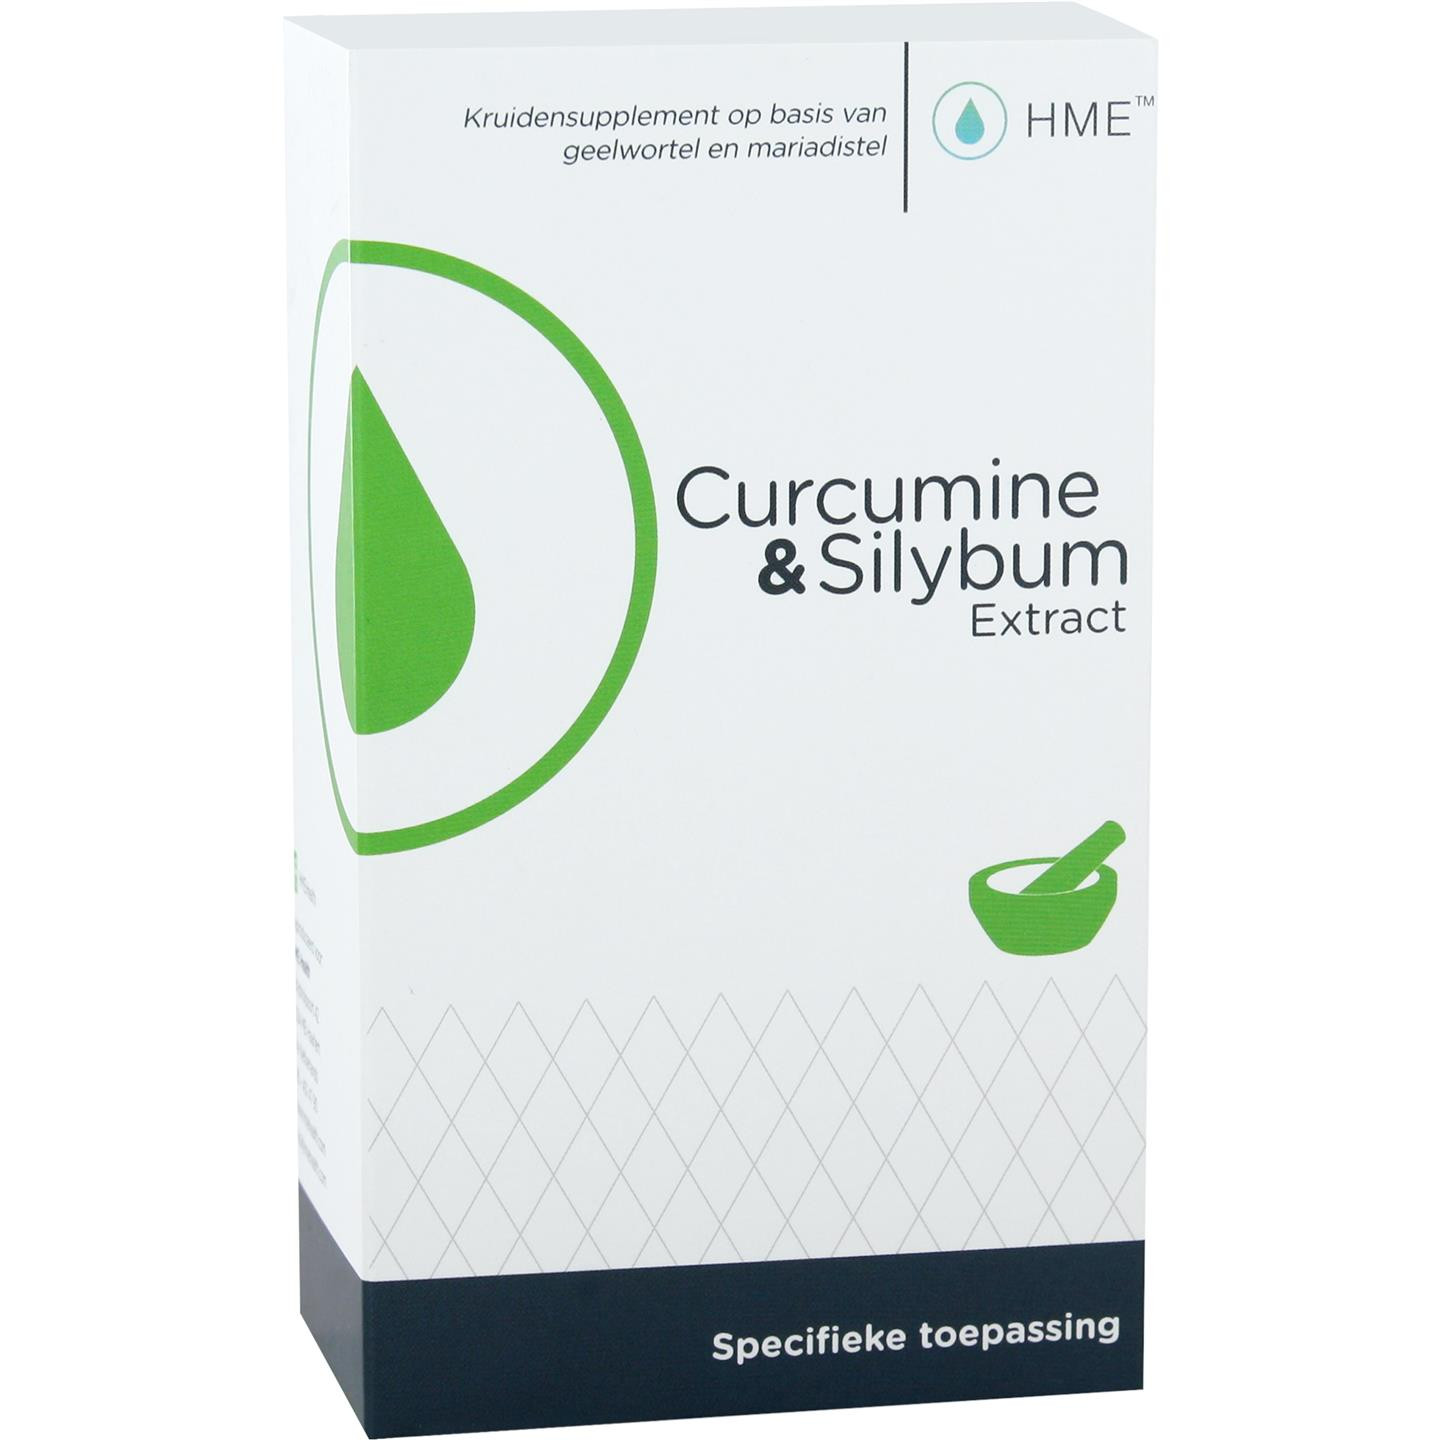 Curcumine & Silybum extract